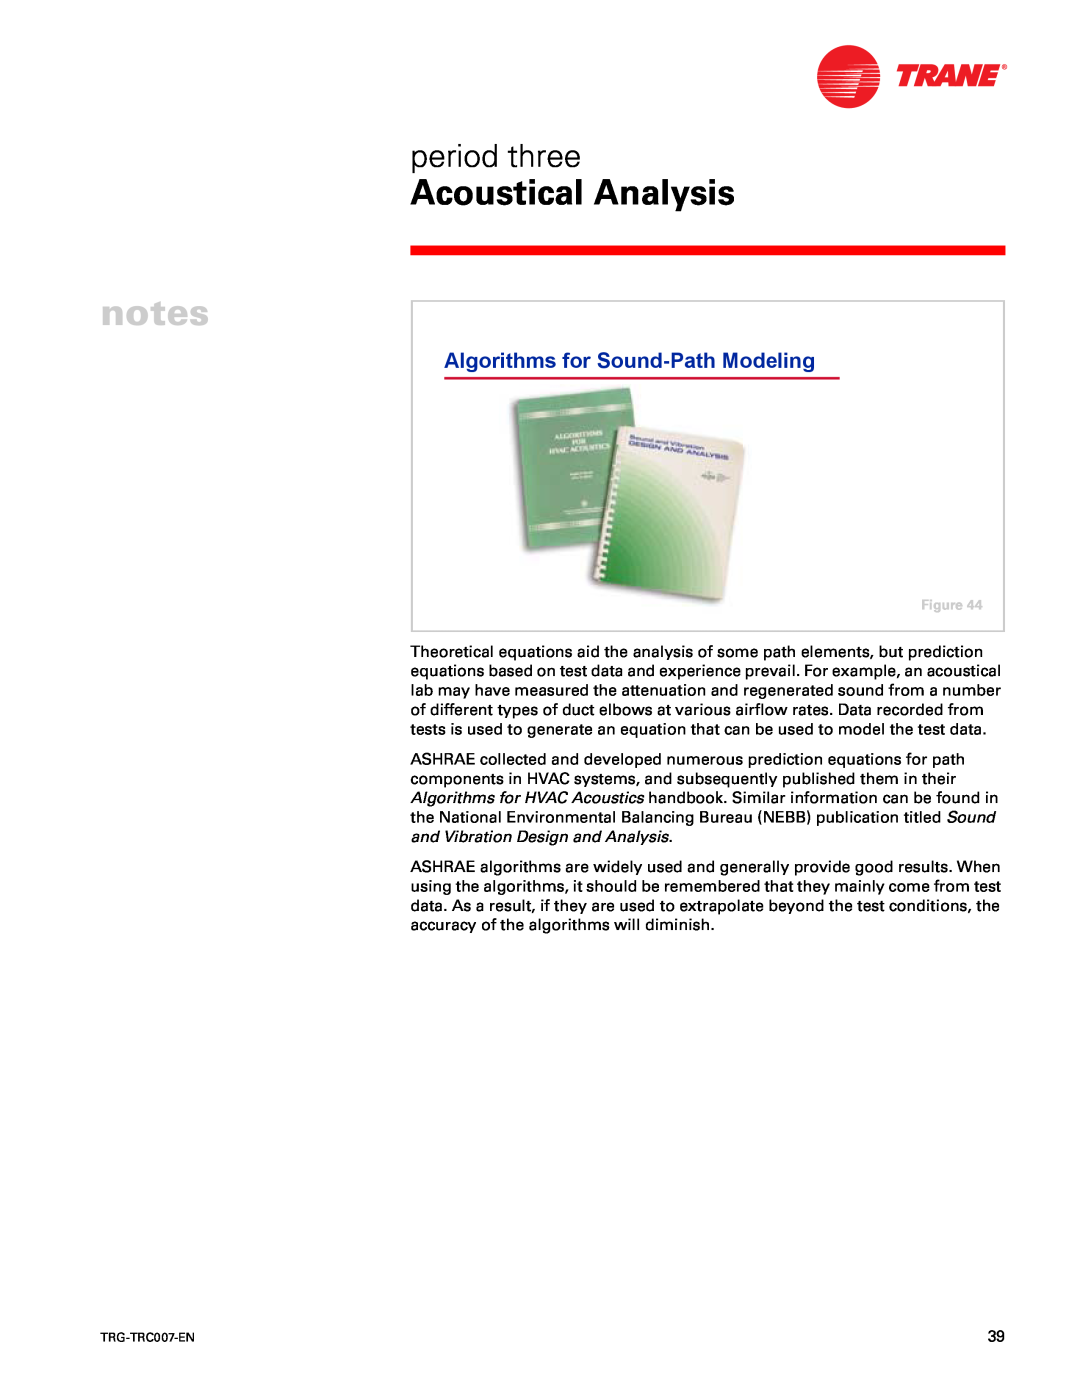 Trane TRG-TRC007-EN manual Algorithms for Sound-PathModeling, Acoustical Analysis, period three 